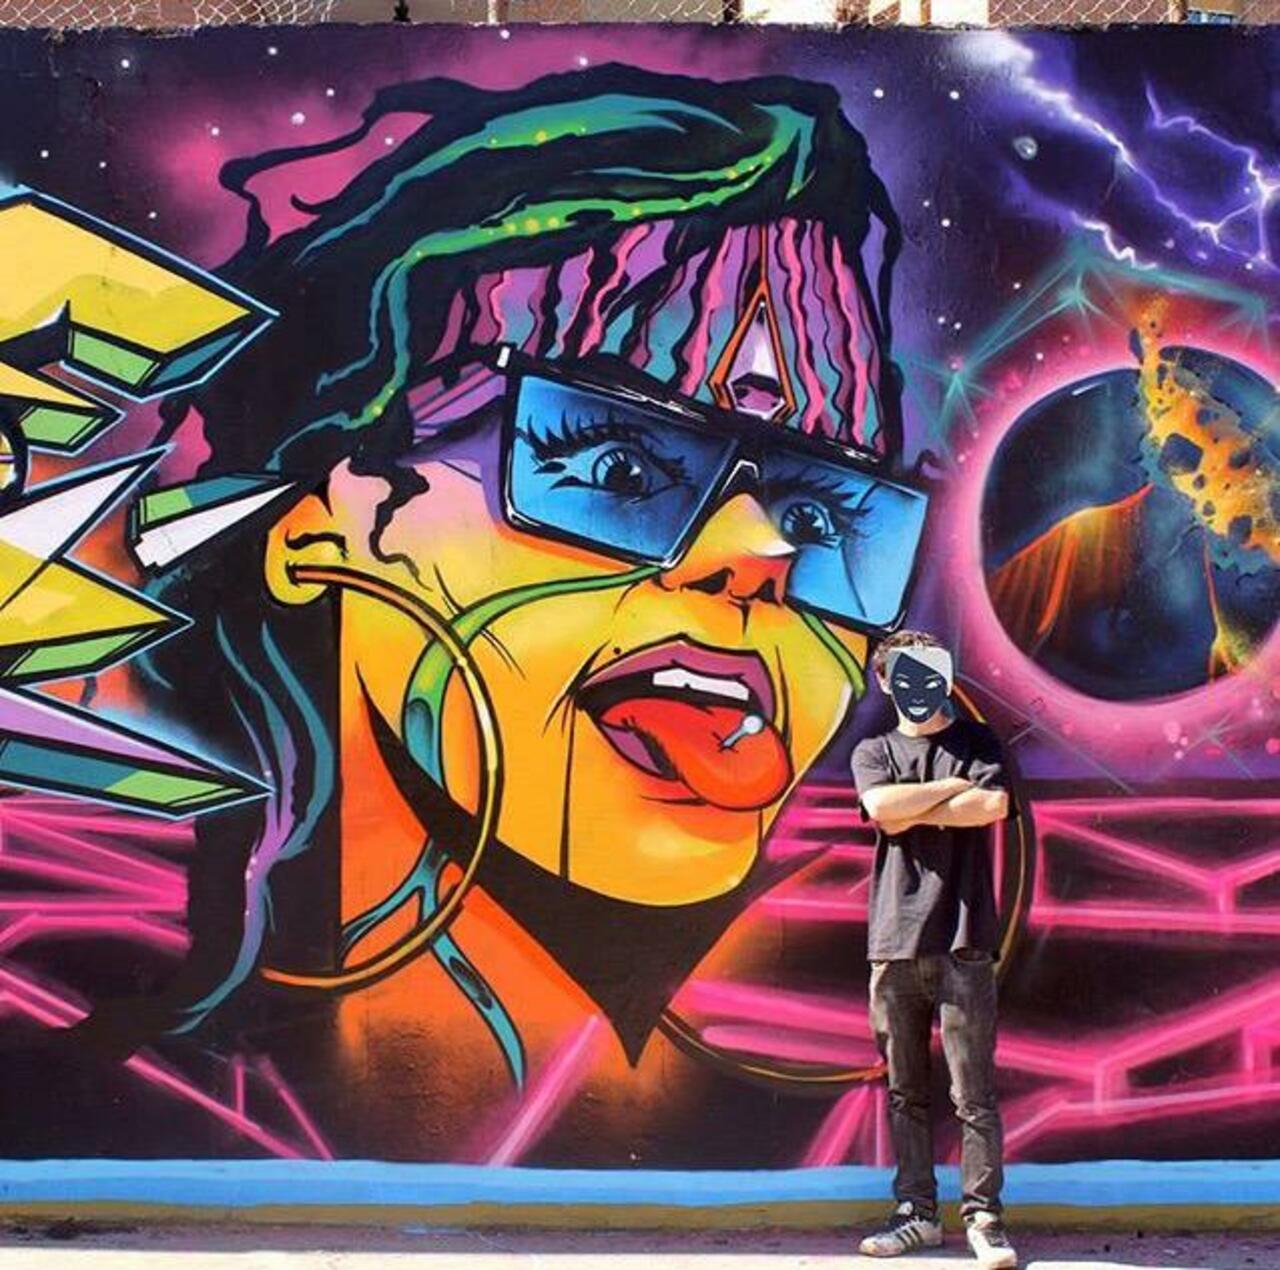 RT @charlesjackso14: Brilliant new Street Art by the artist Jaycaes #art #graffiti #mural #streetart http://t.co/TiNYDNPlxf … … … http://twitter.com/charlesjackso14/status/649568931670269953